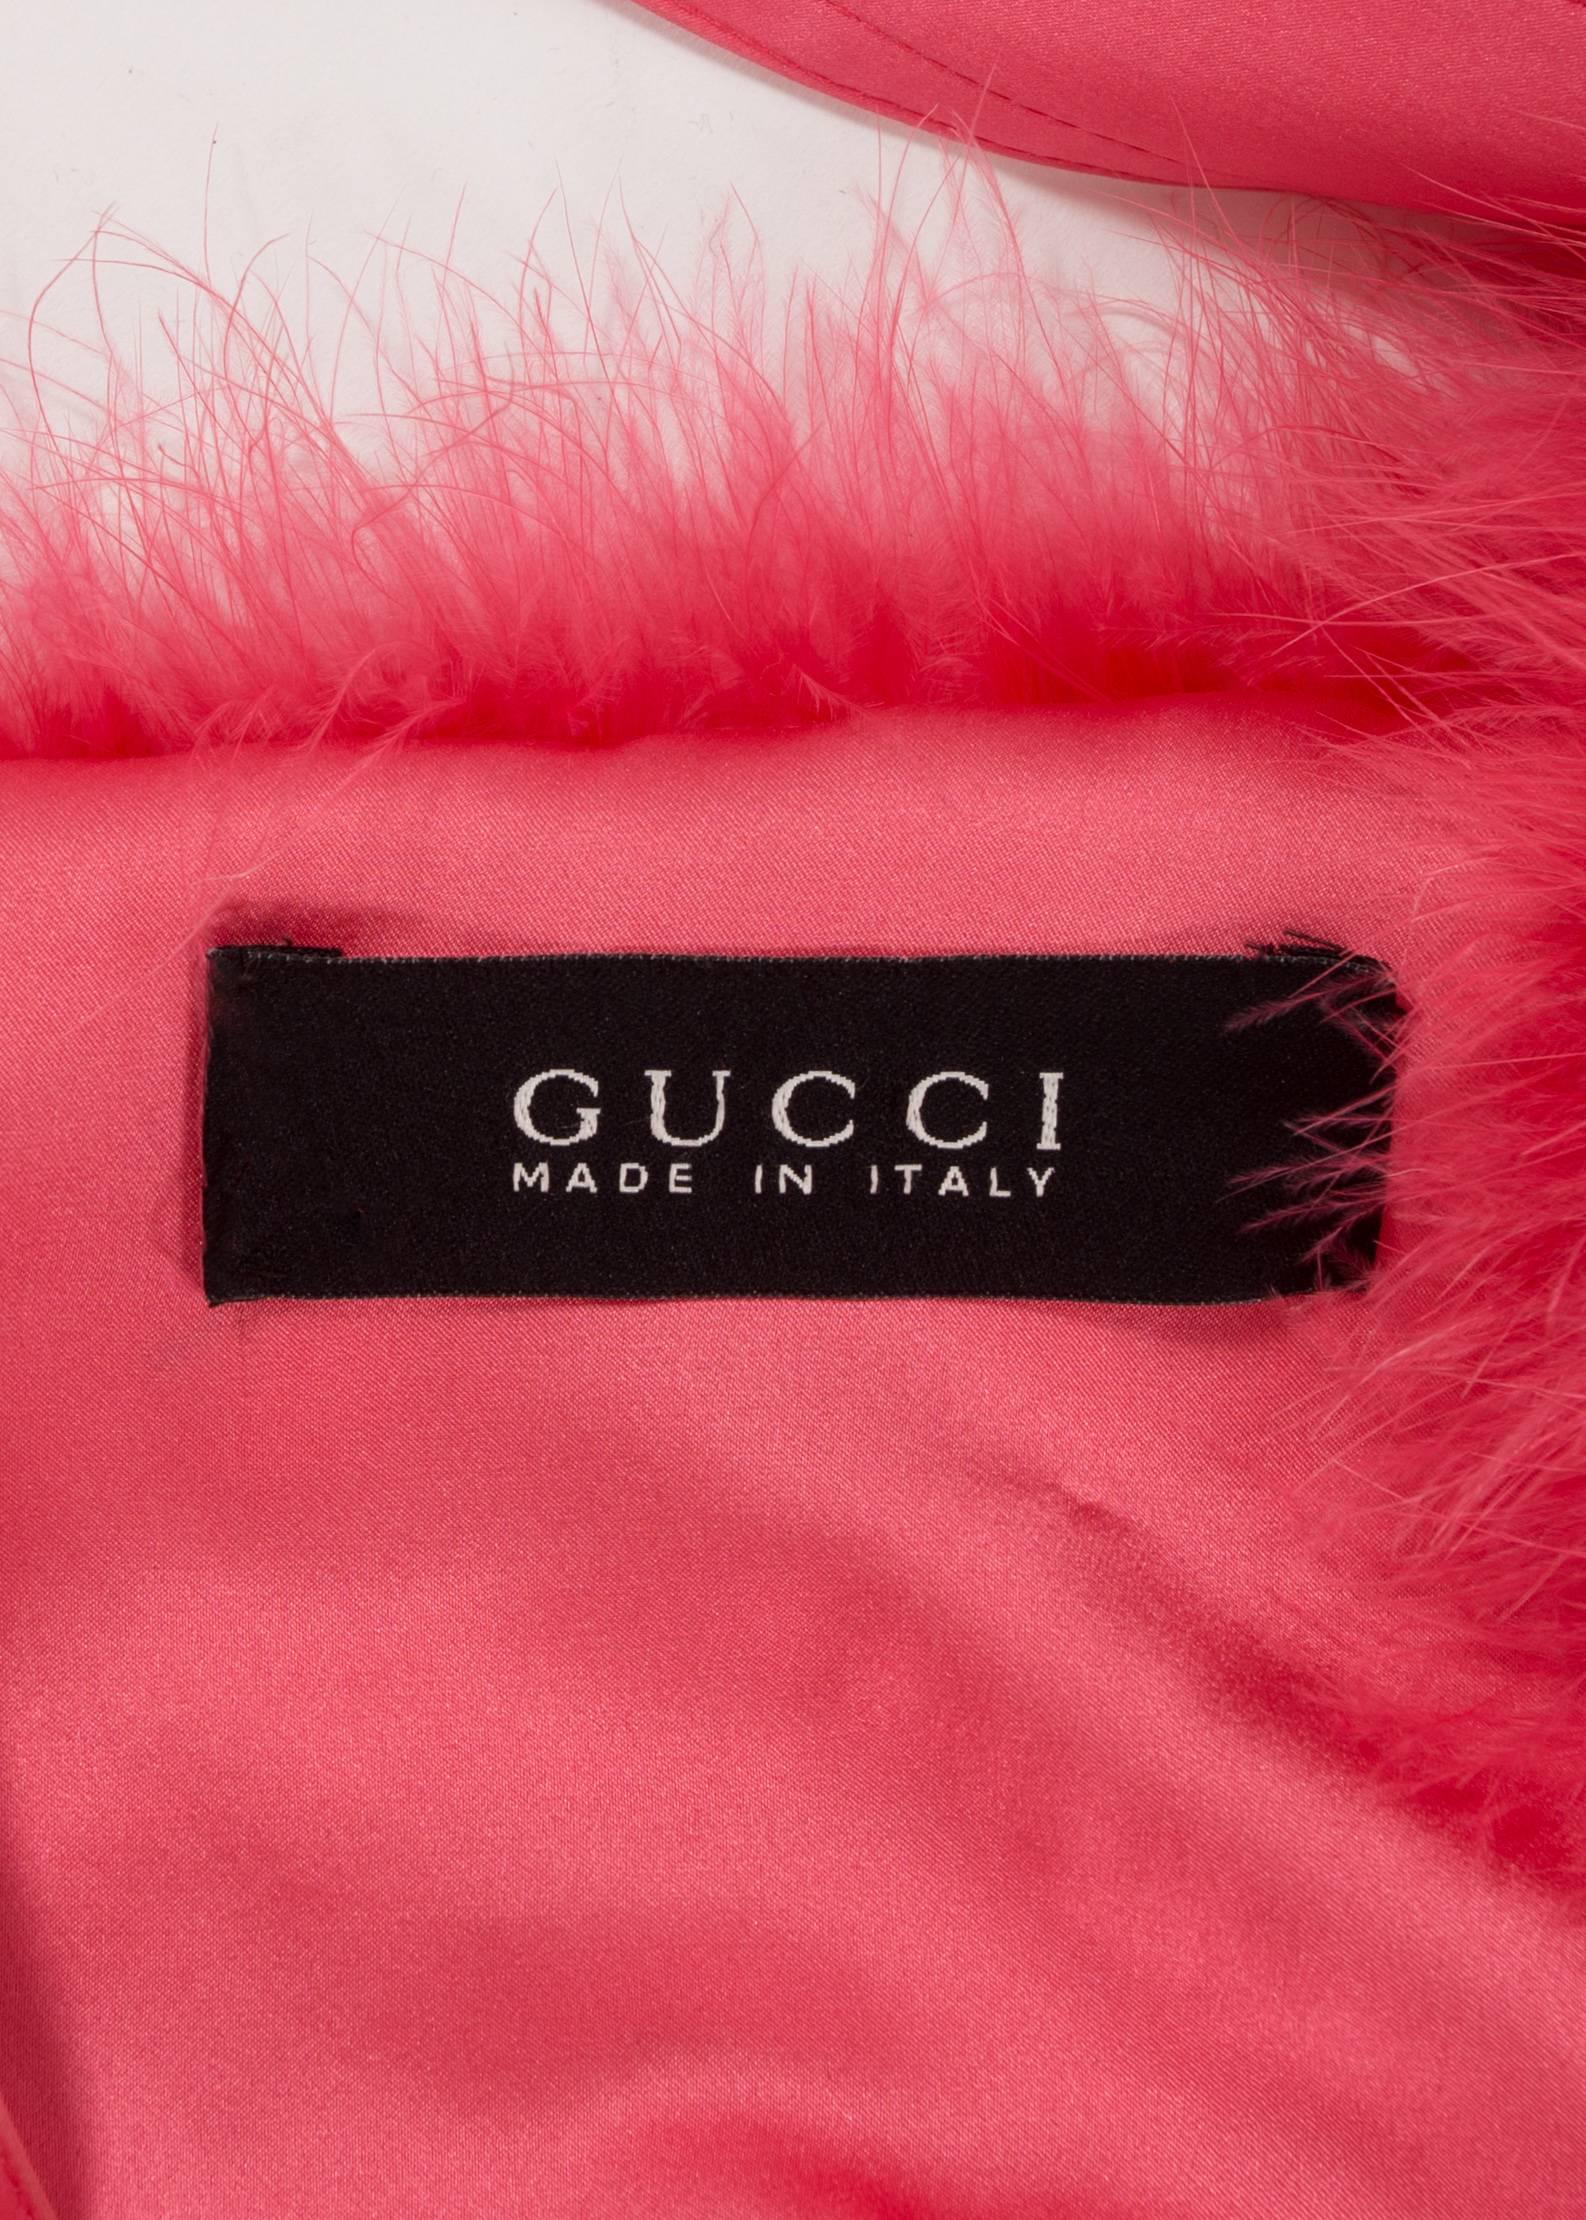 Tom Ford for Gucci Spring-Summer 2004 hot pink marabou bolero jacket  2